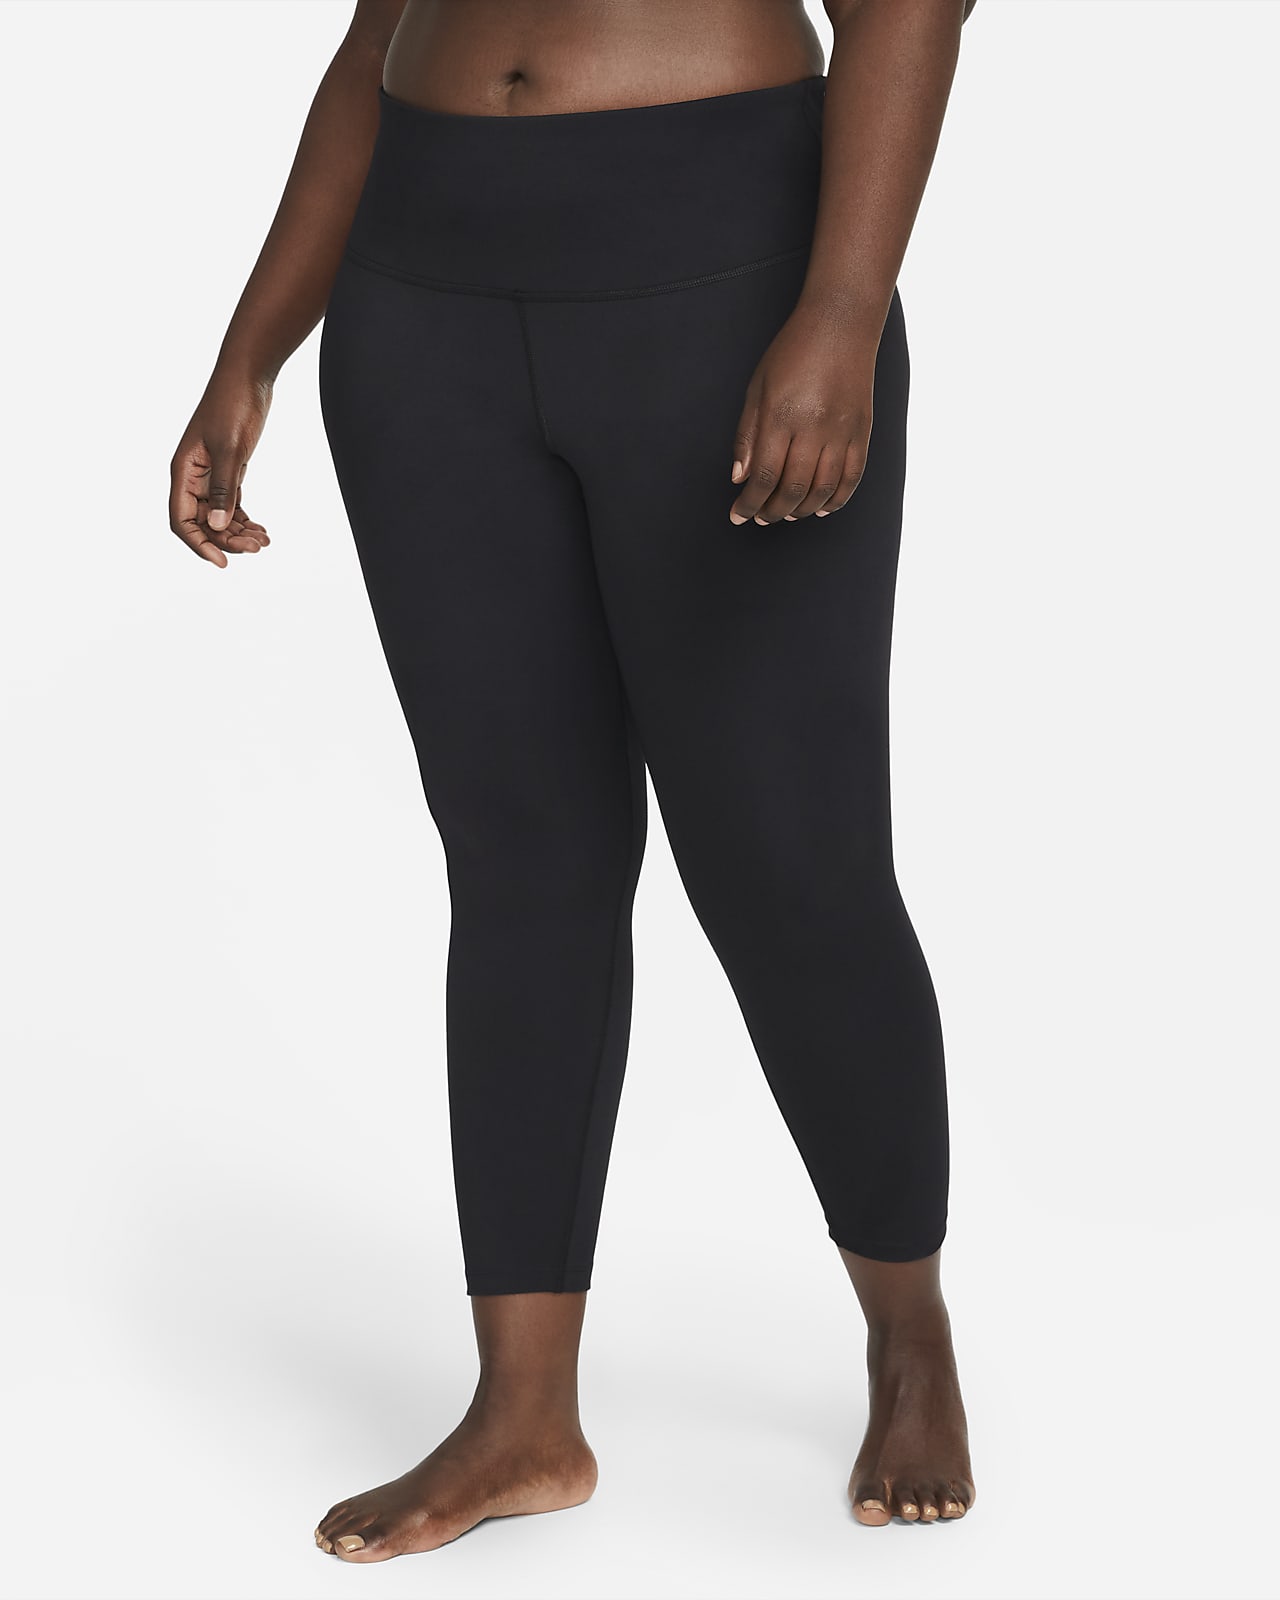 Nike Yoga magas derekú, 7/8-os női leggings (plus size méret)